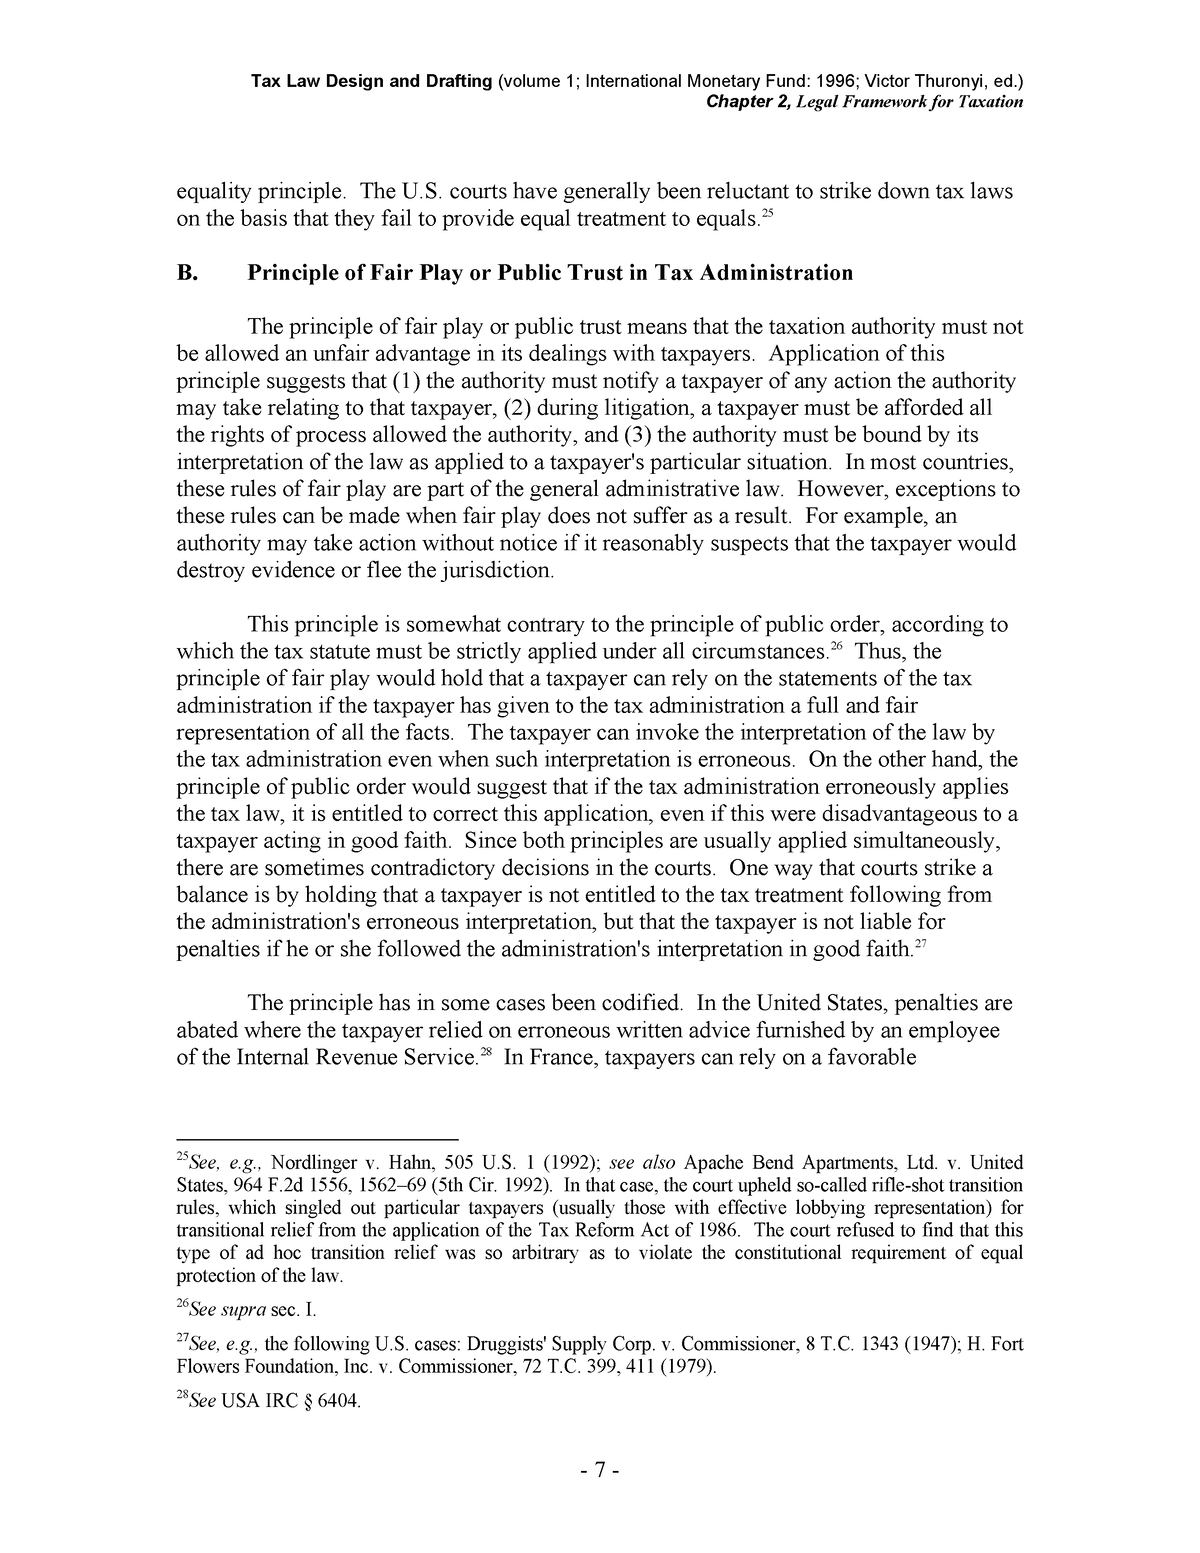 Ch2-3 - n/a - Tax Law Design and Drafting (volume 1; International ...